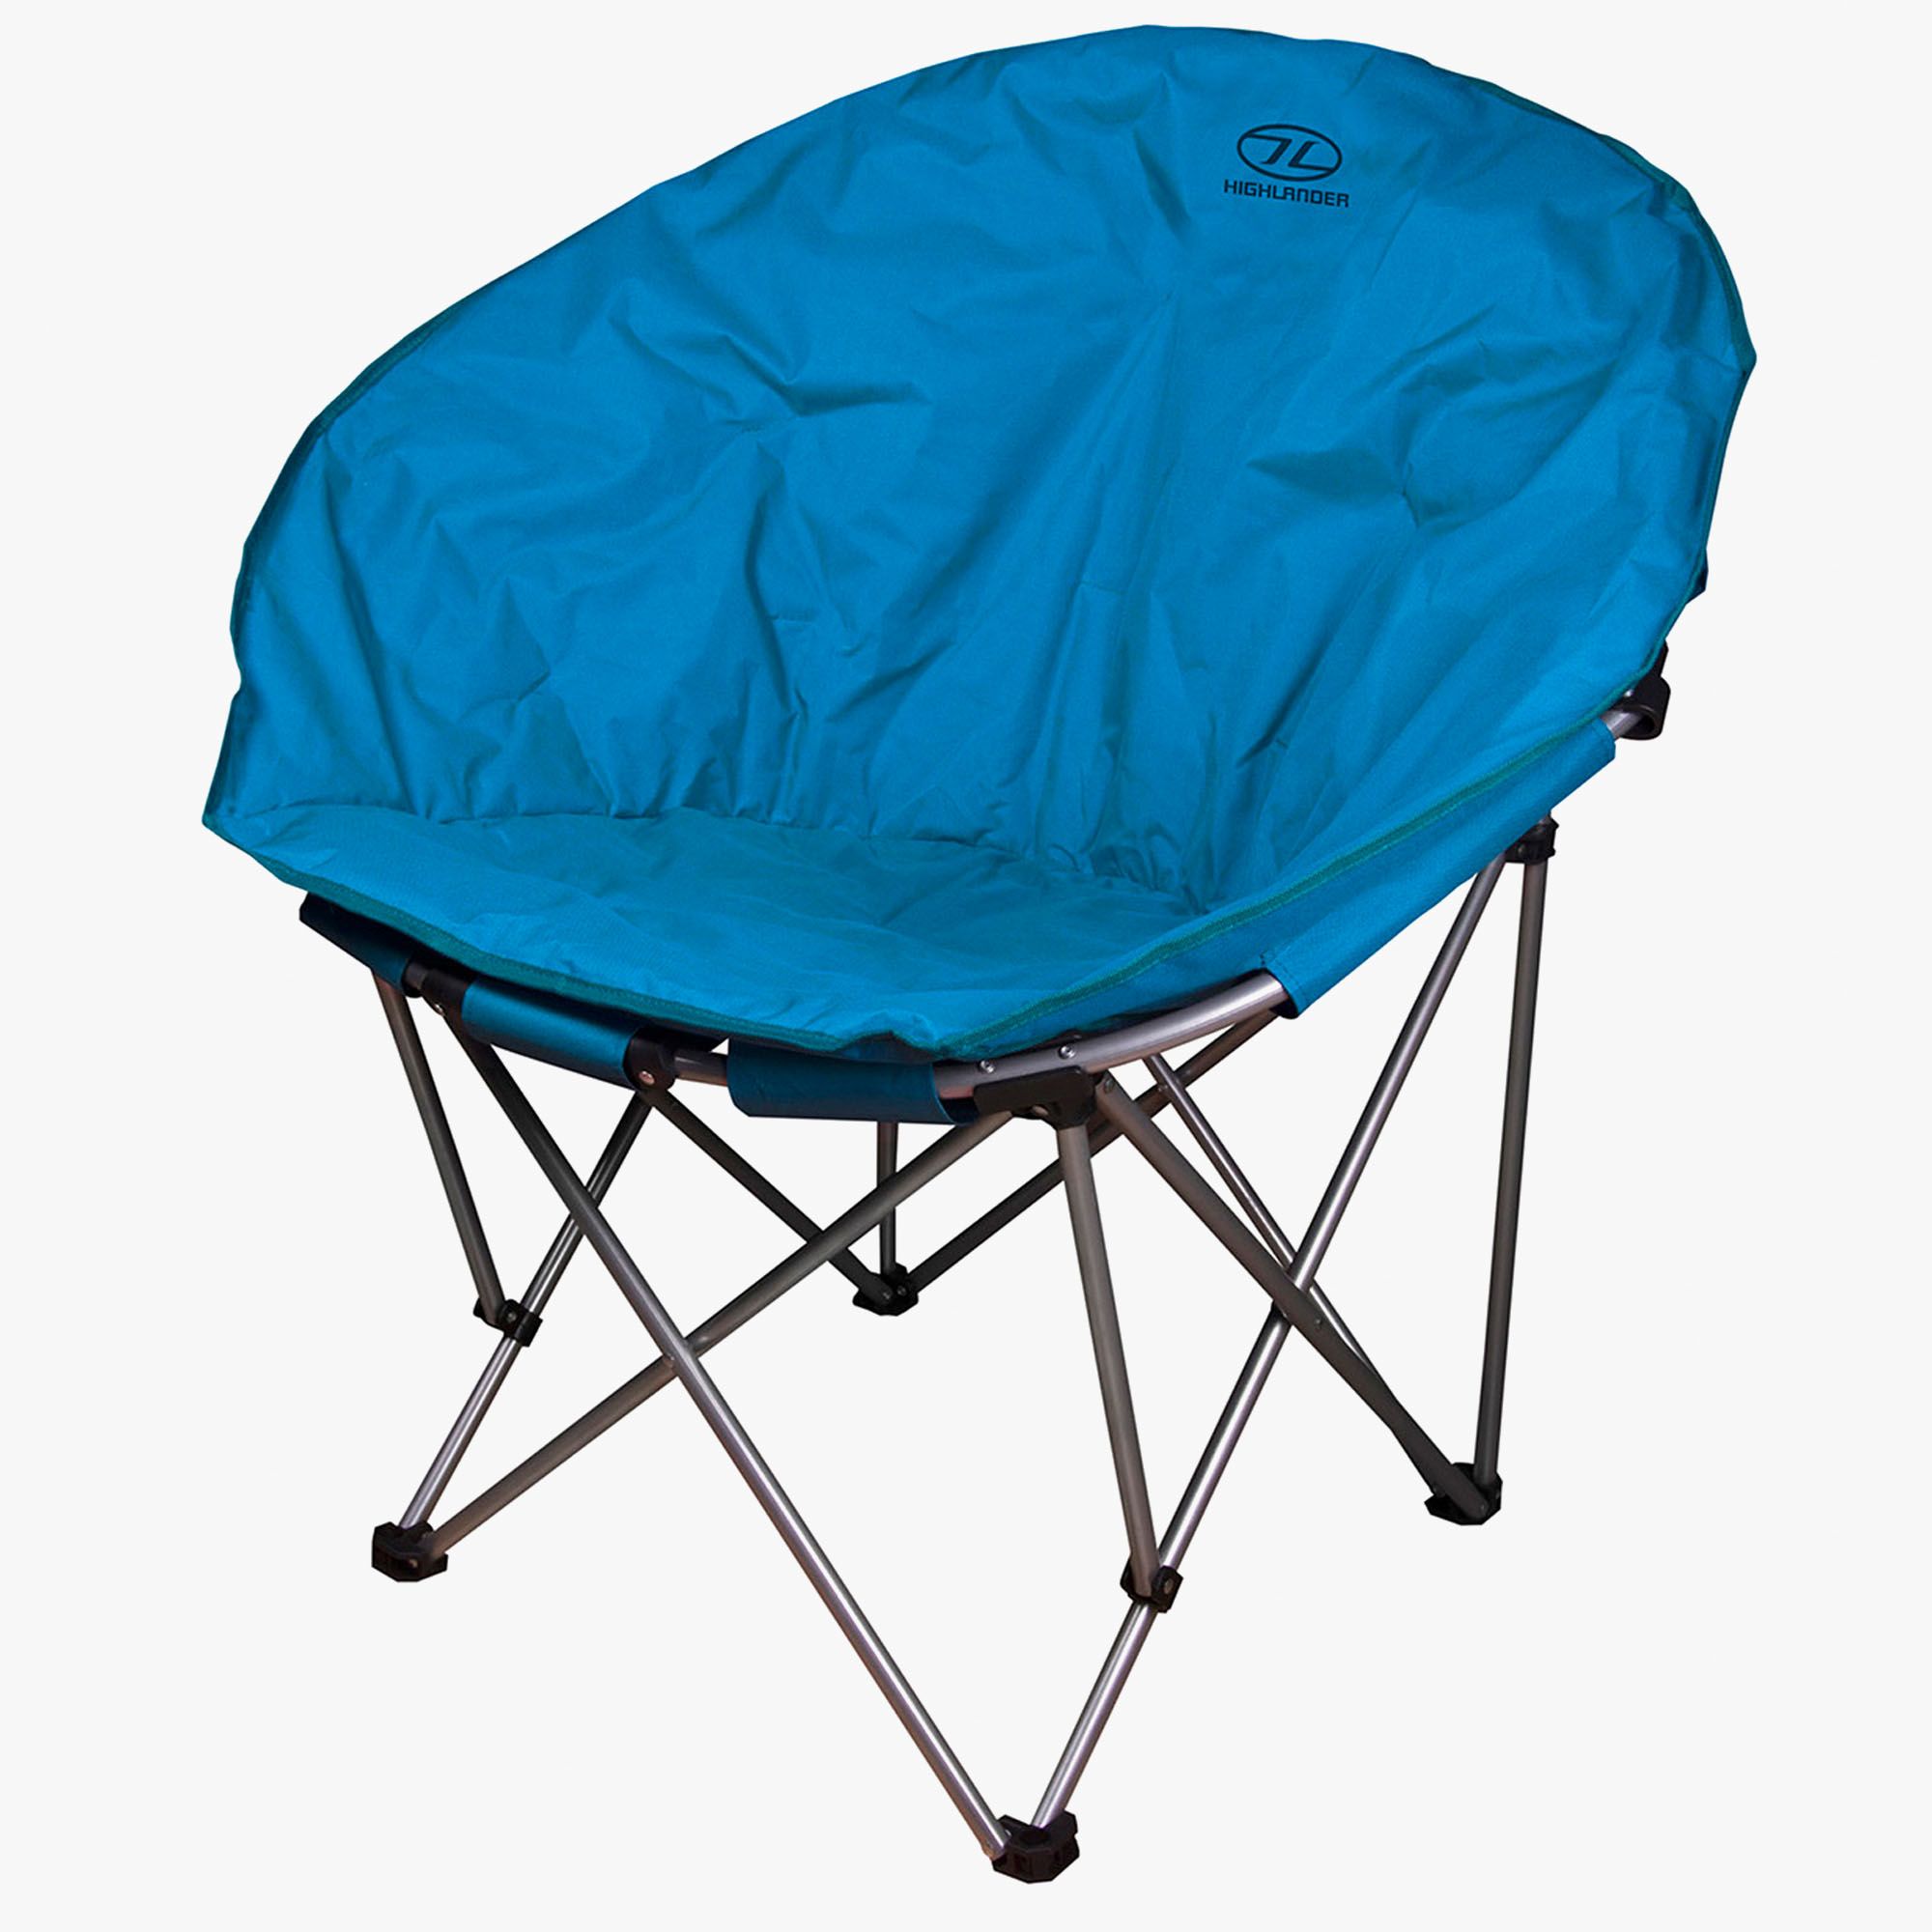 Highlander Outdoor Moon Chair The Expert Camper